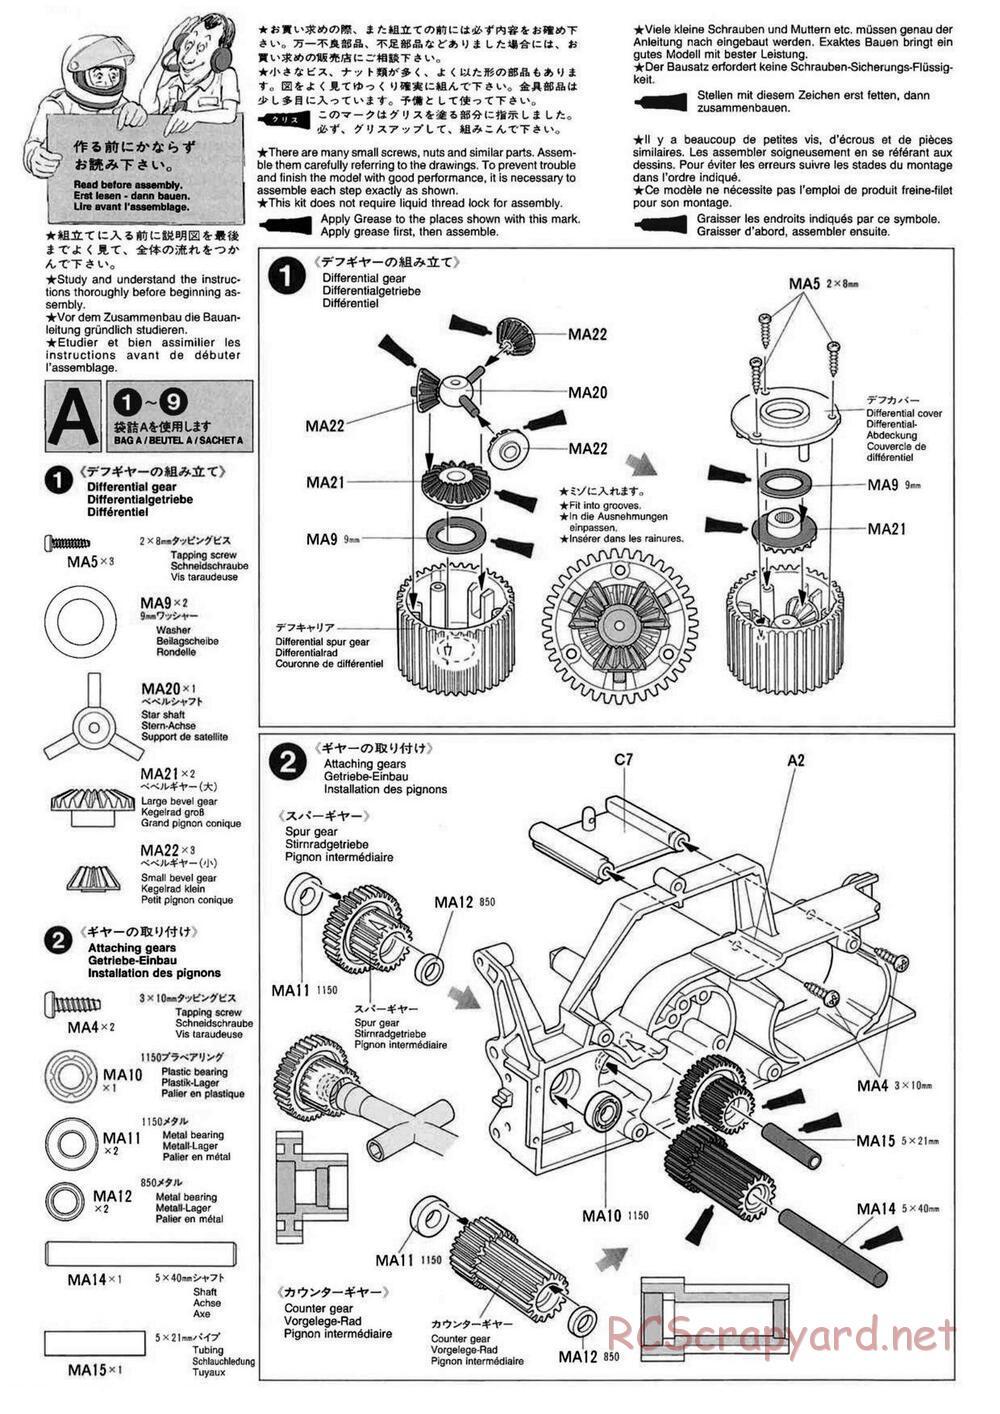 Tamiya - FF-02 Chassis - Manual - Page 4